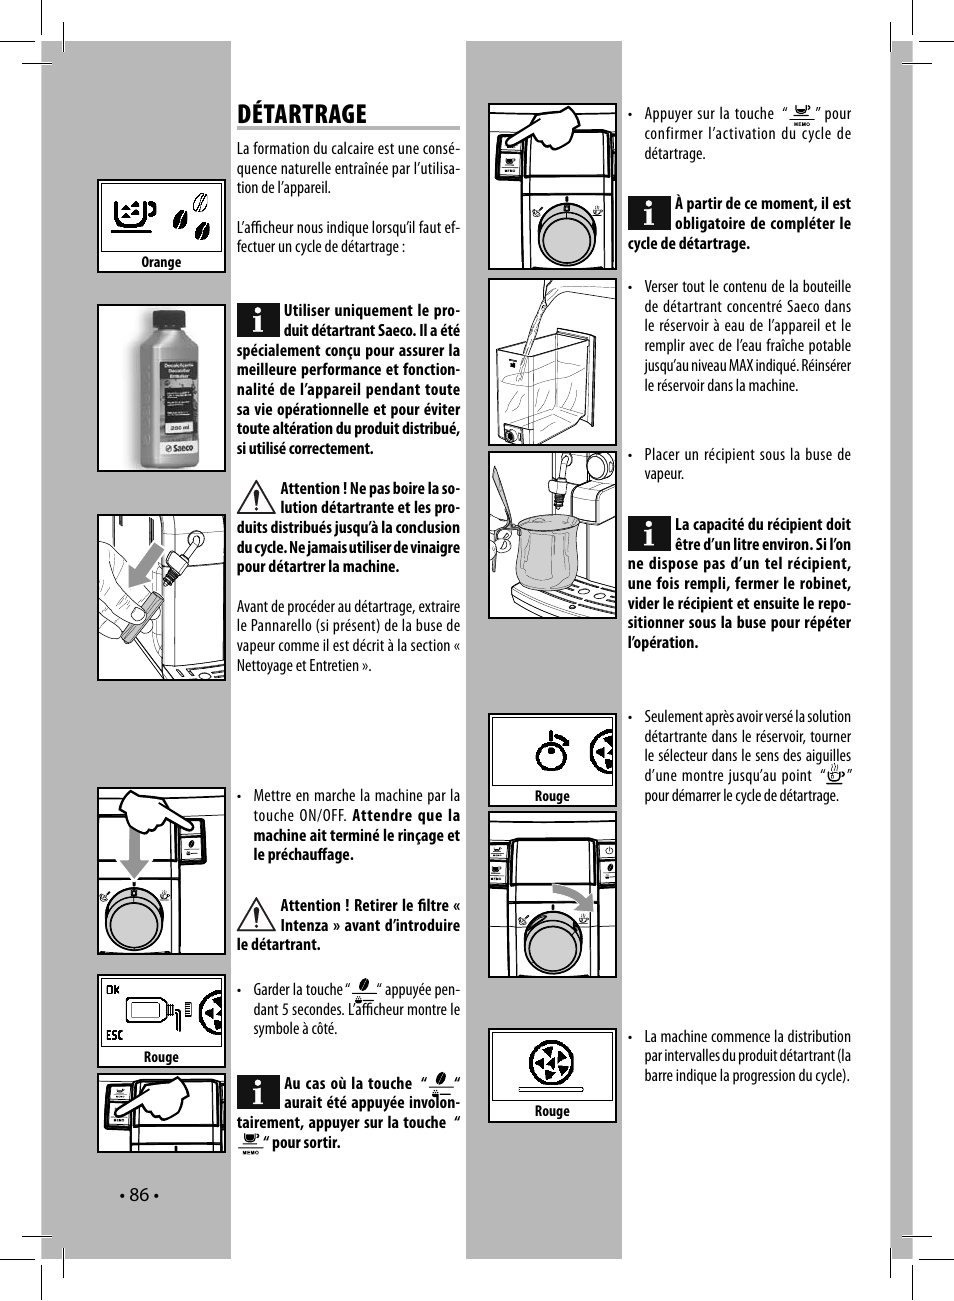 Détartrage | Philips Saeco Syntia Kaffeevollautomat User Manual | Page 86 /  96 | Original mode